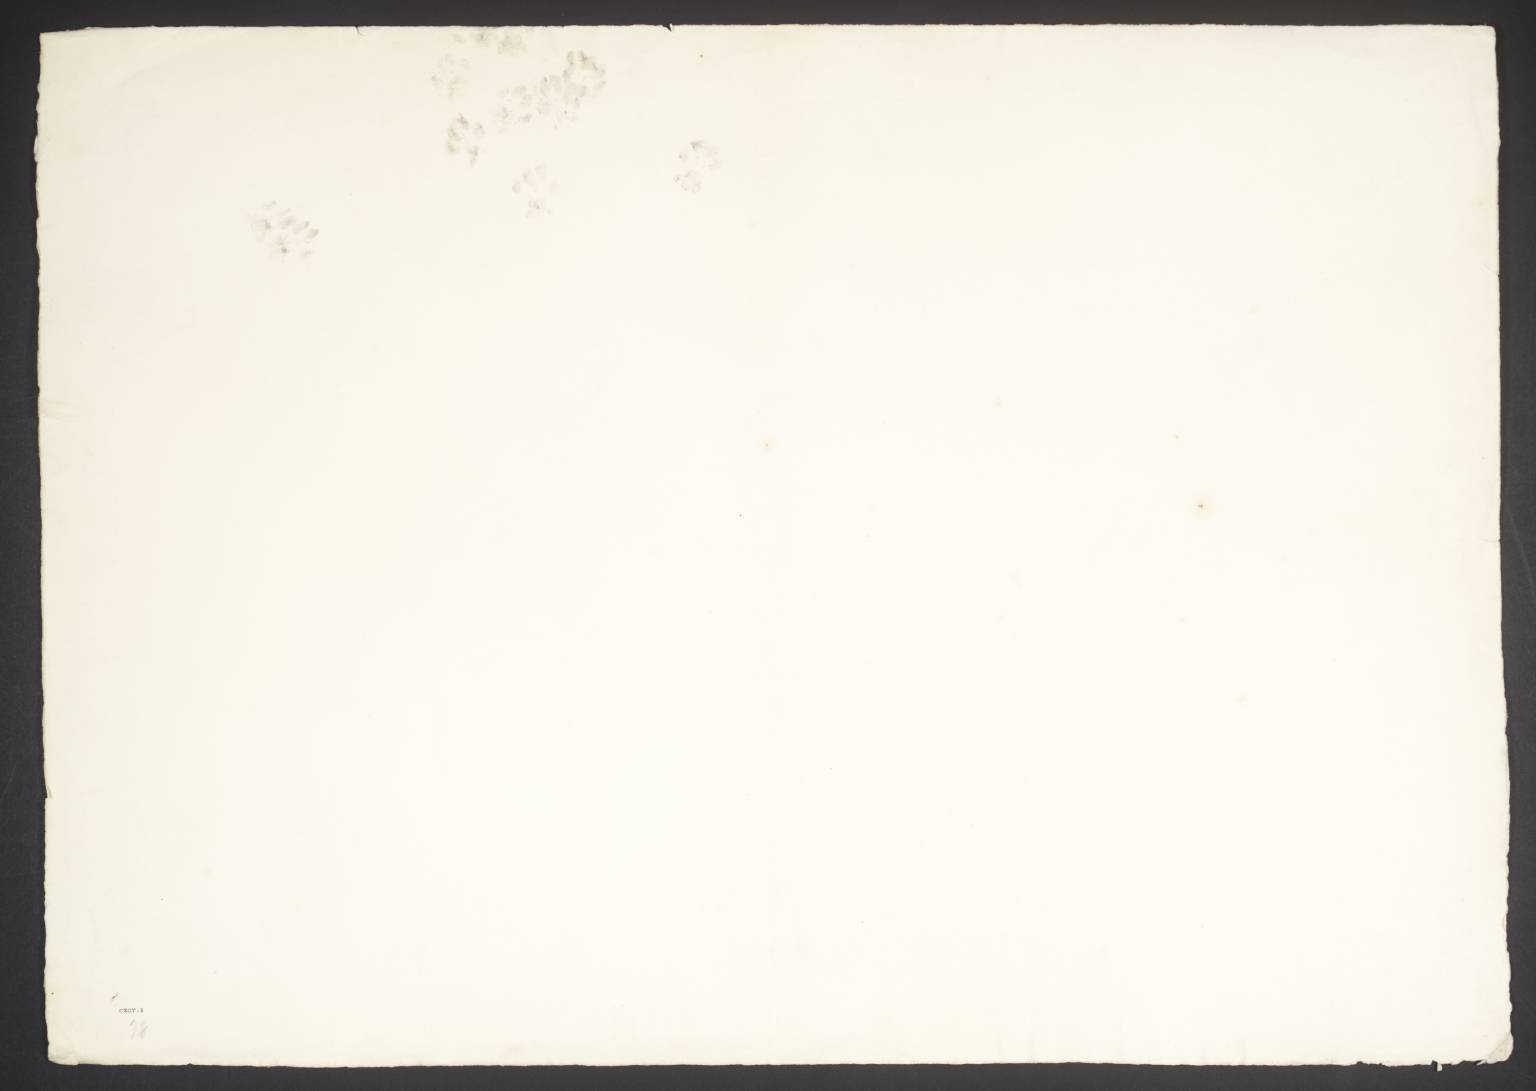 Joseph Mallord William Turner, 'Blank' (J.M.W. Turner: Sketchbooks